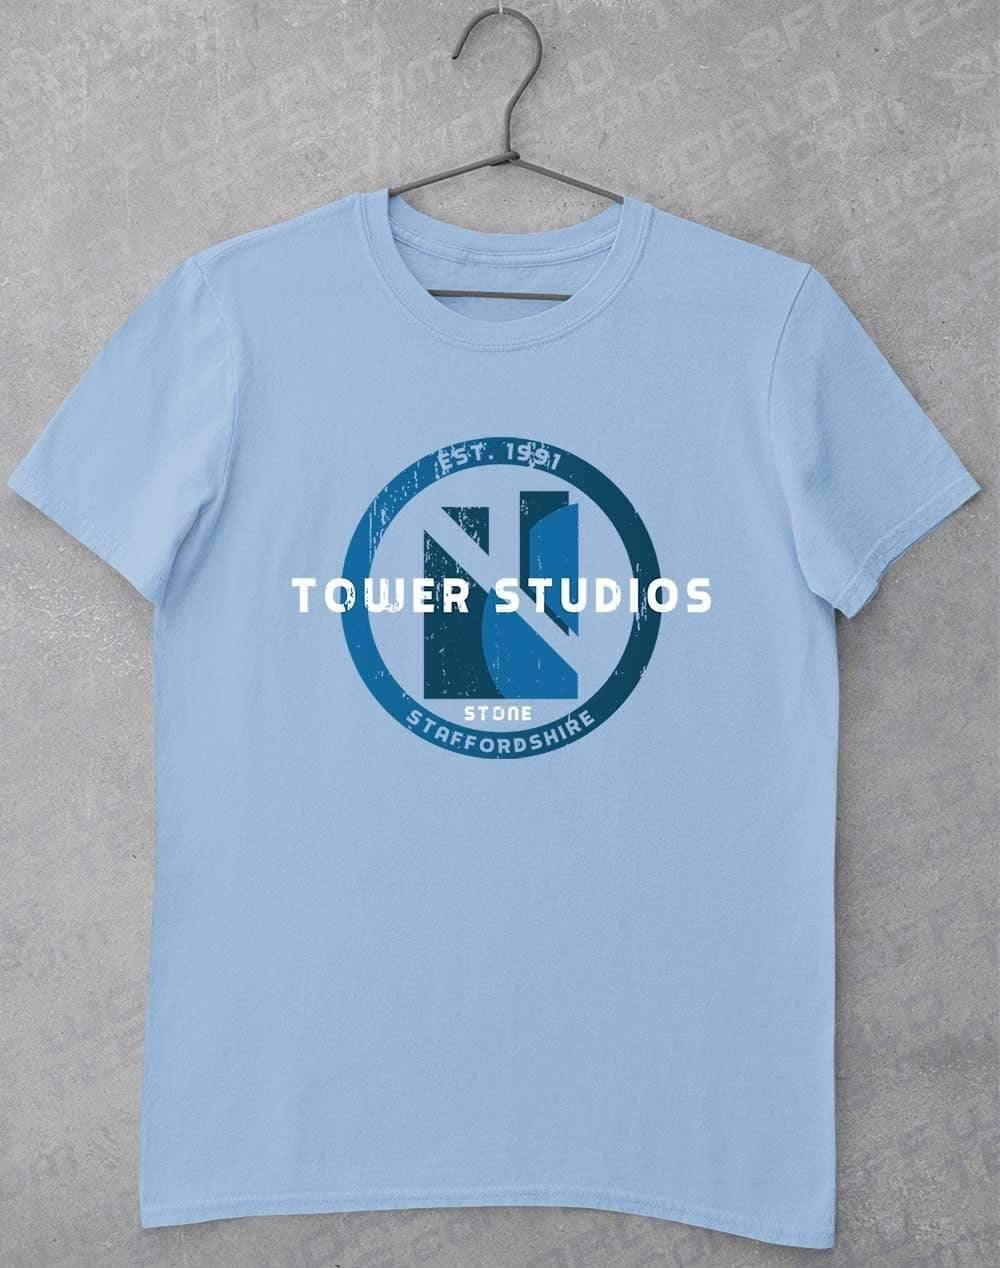 Tower Studios Grunge Circle T-Shirt S / Light Blue  - Off World Tees